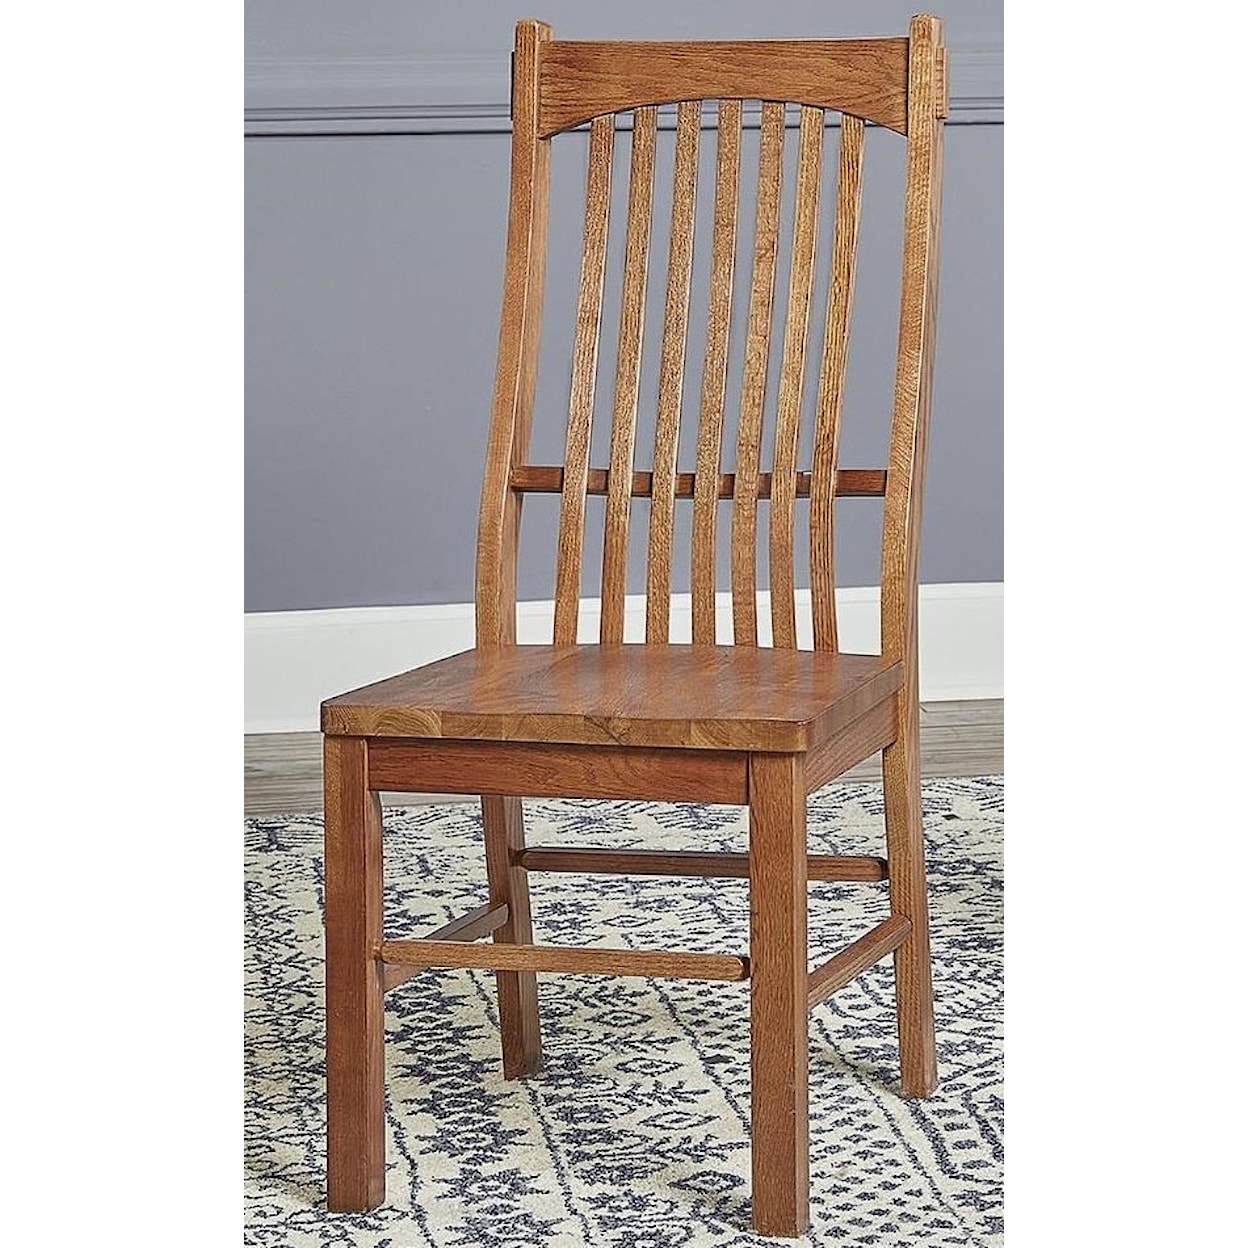 AAmerica 14113 Side Chair